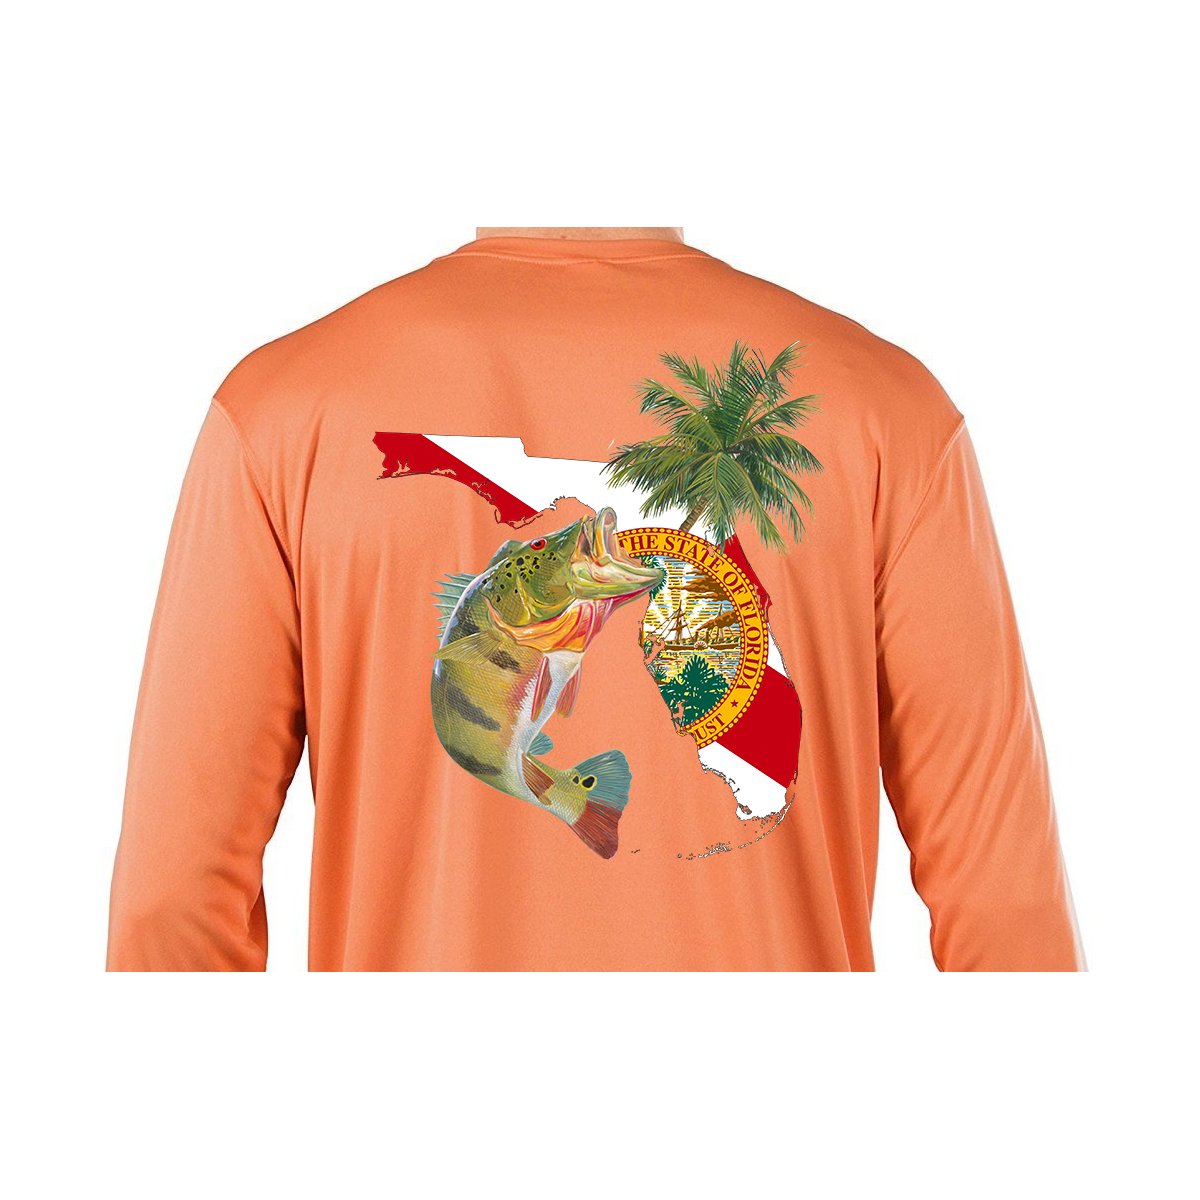 Peacock Bass Florida Fishing Shirt with FL State Flag Sleeve https://t.co/rUSDtdPfkD #<-----TapTheLink #SkiffLife https://t.co/W2ESq9SqKI